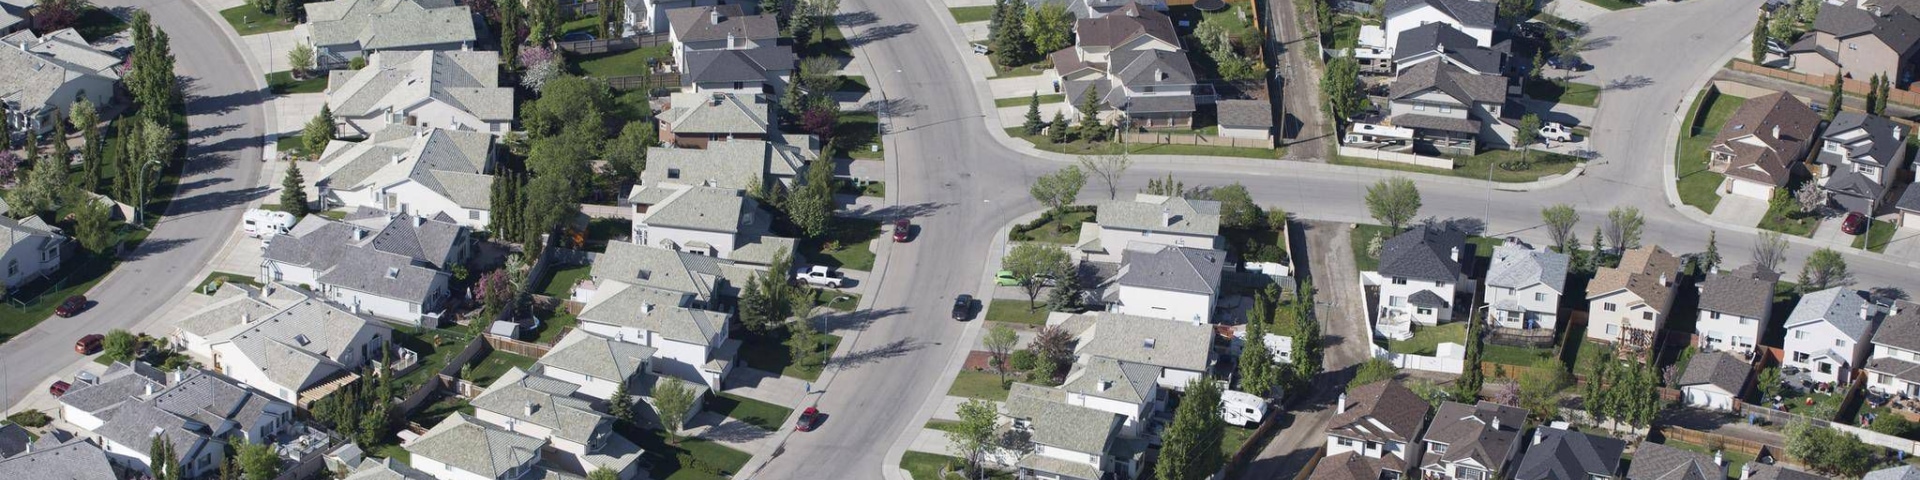 Birds-eye view of a Calgary community